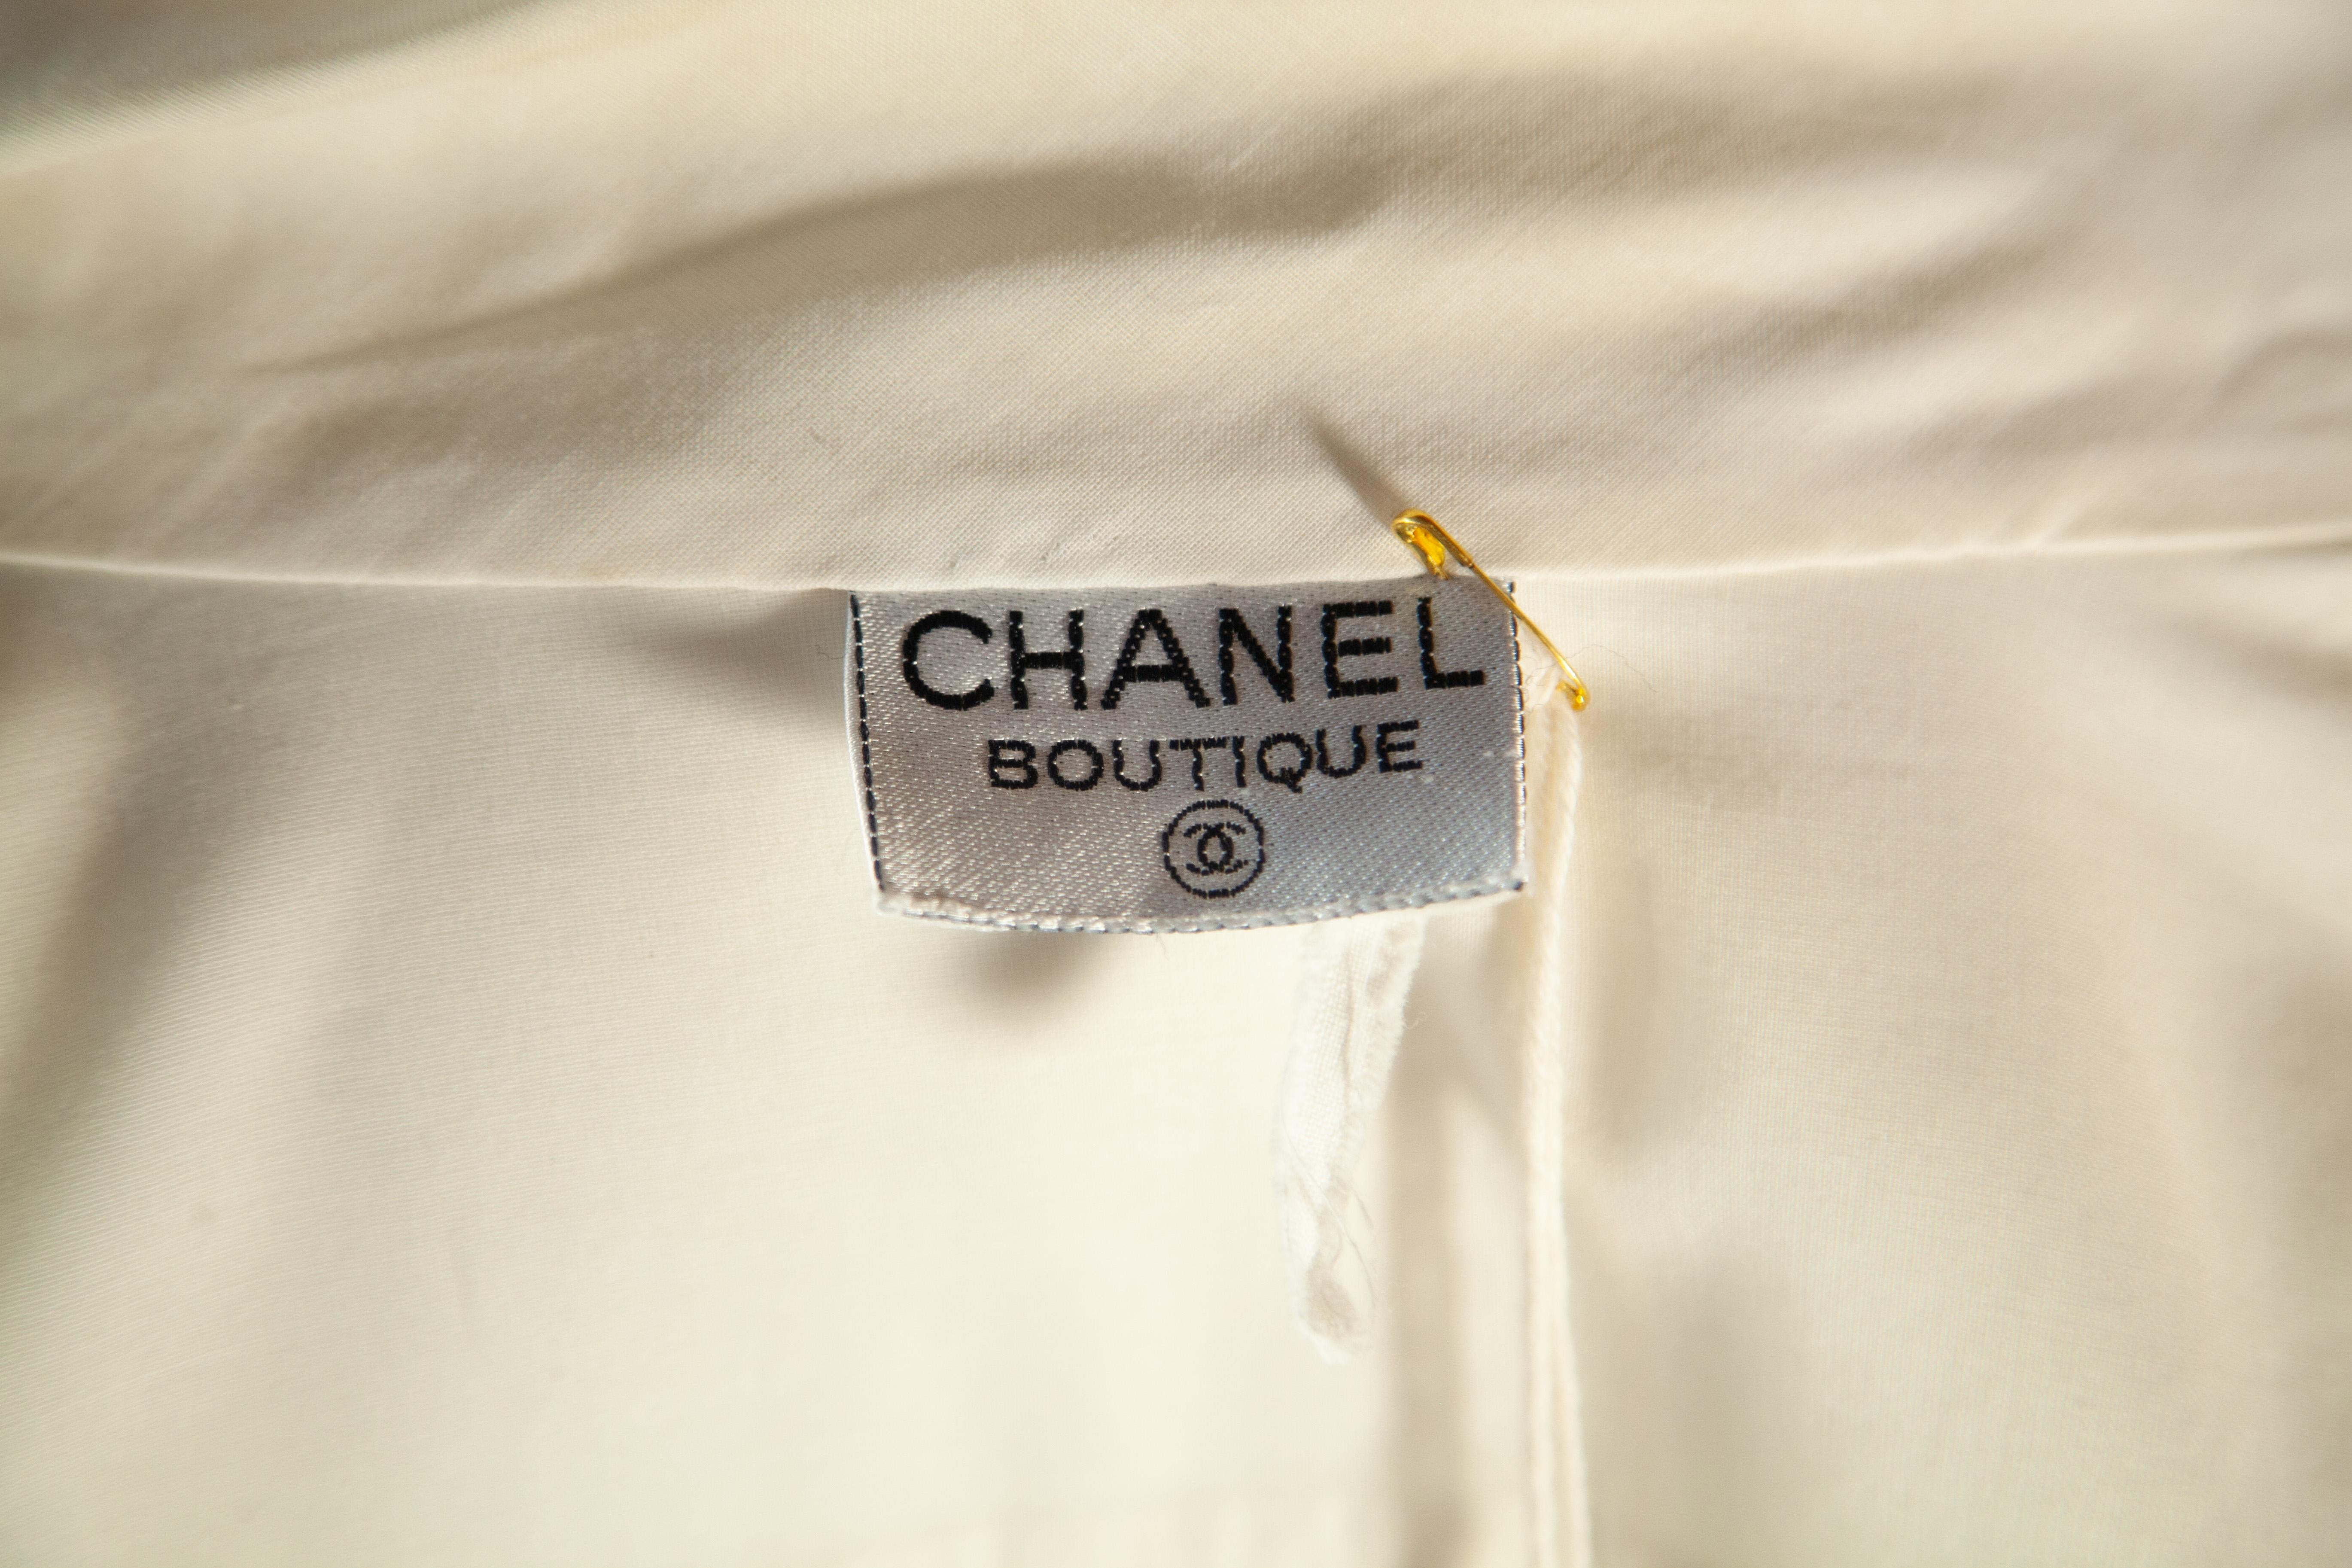 1980s Chanel Boutique Unisex White Tuxedo Shirt  For Sale 6